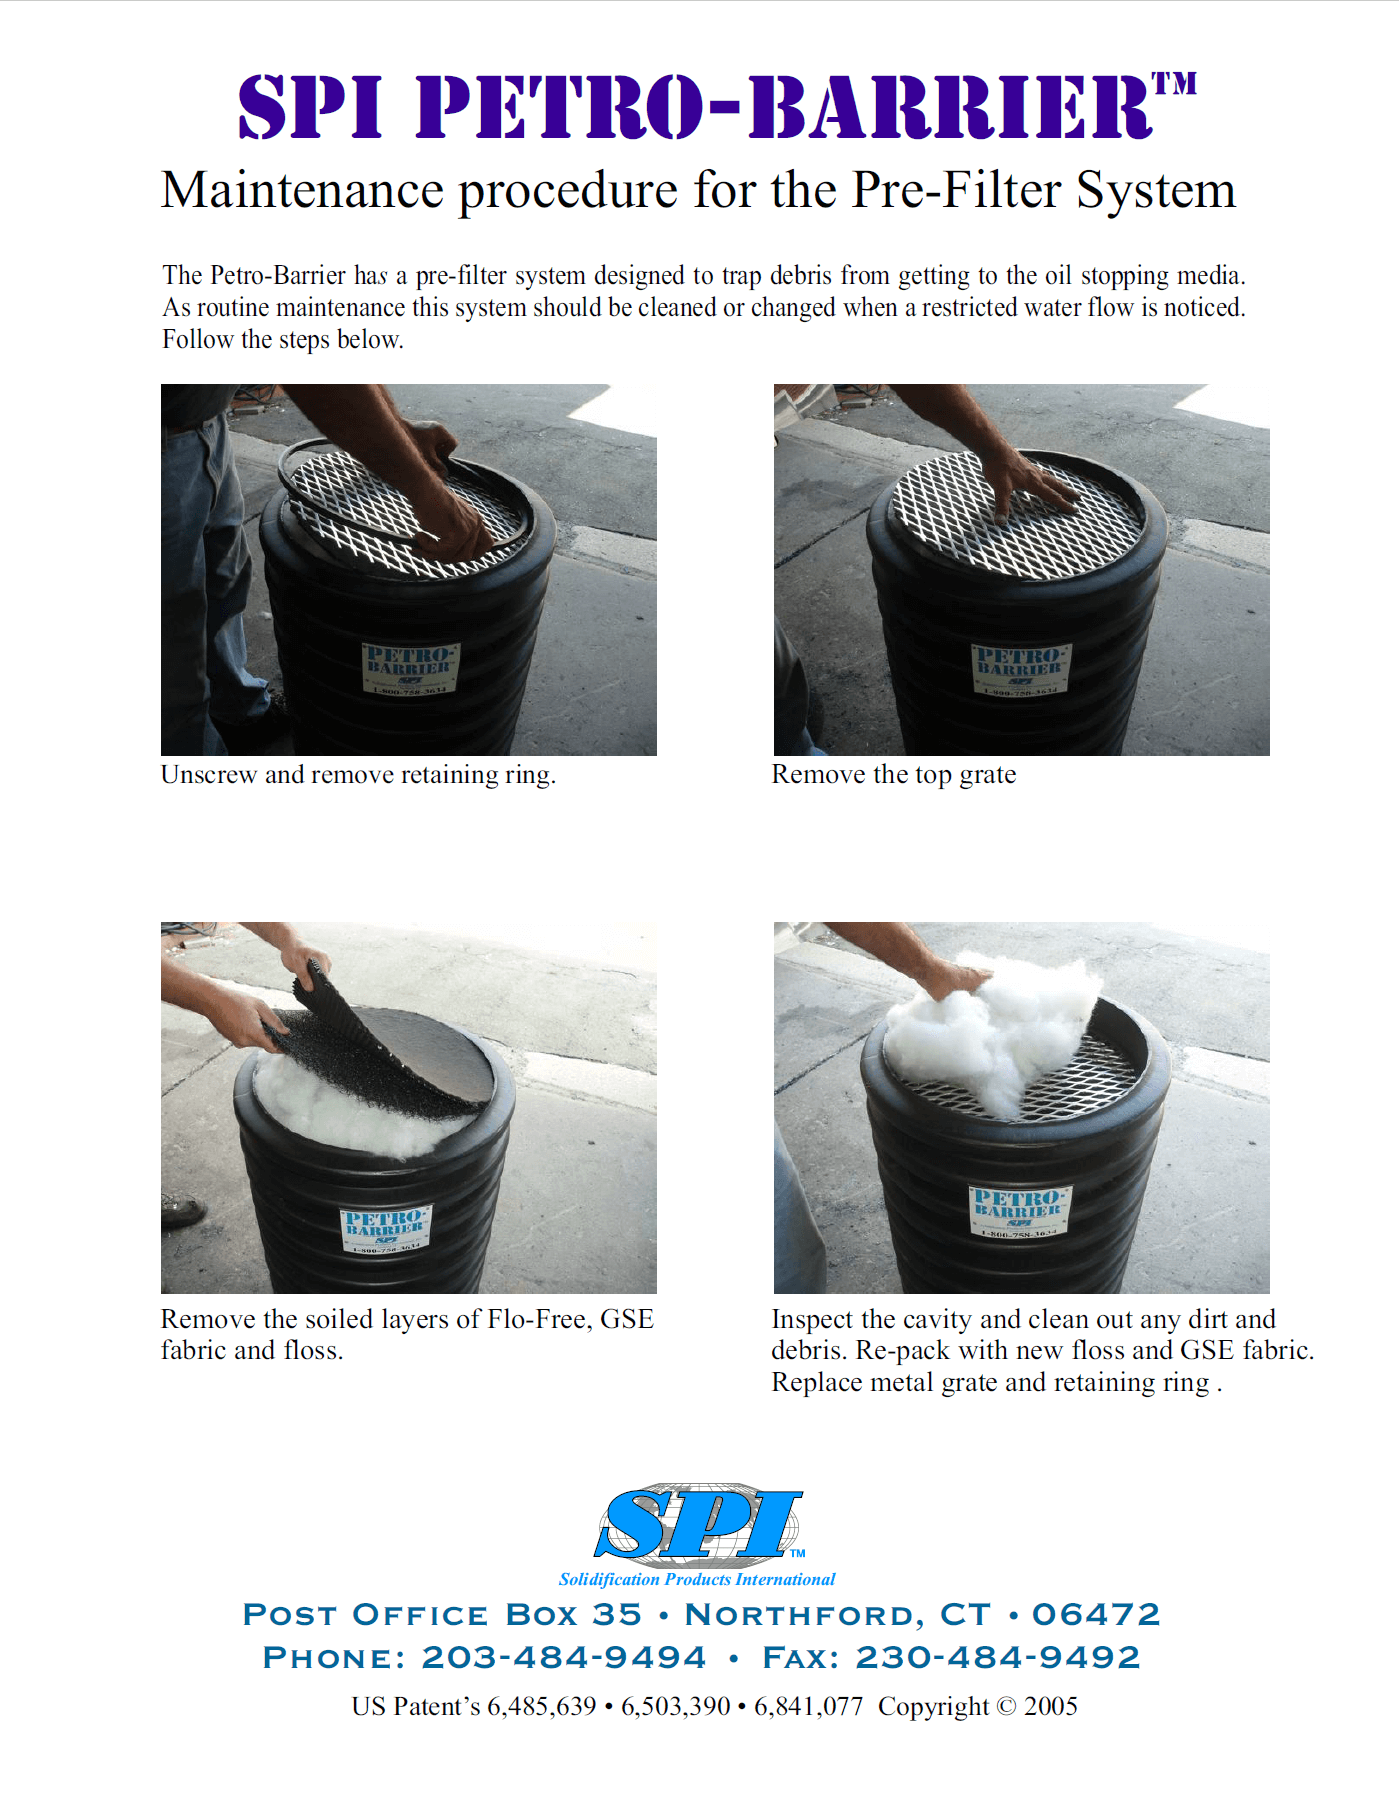 SPI Petro-Barrier maintenance procedure for the pre-filter system